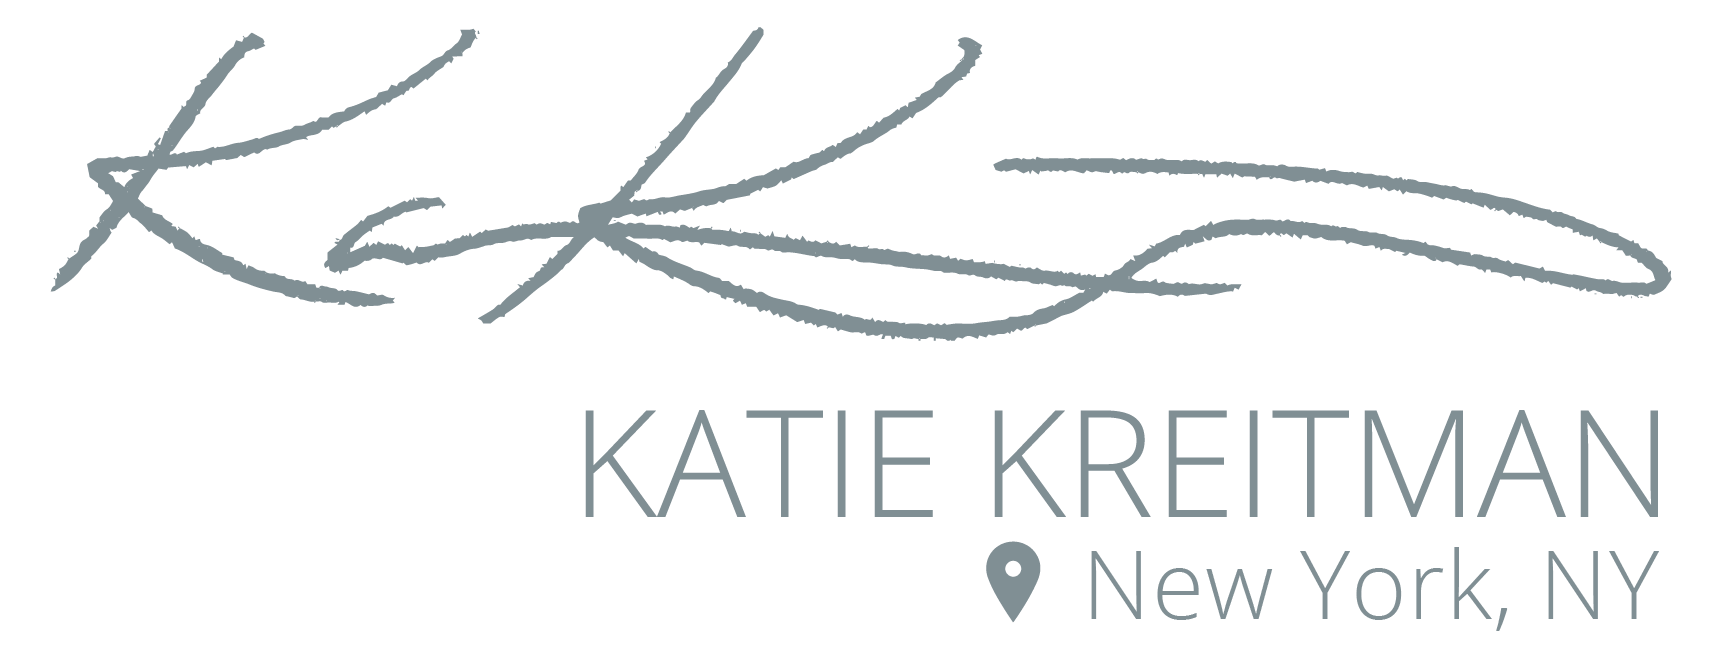 Katie Kreitman | Digital Artist